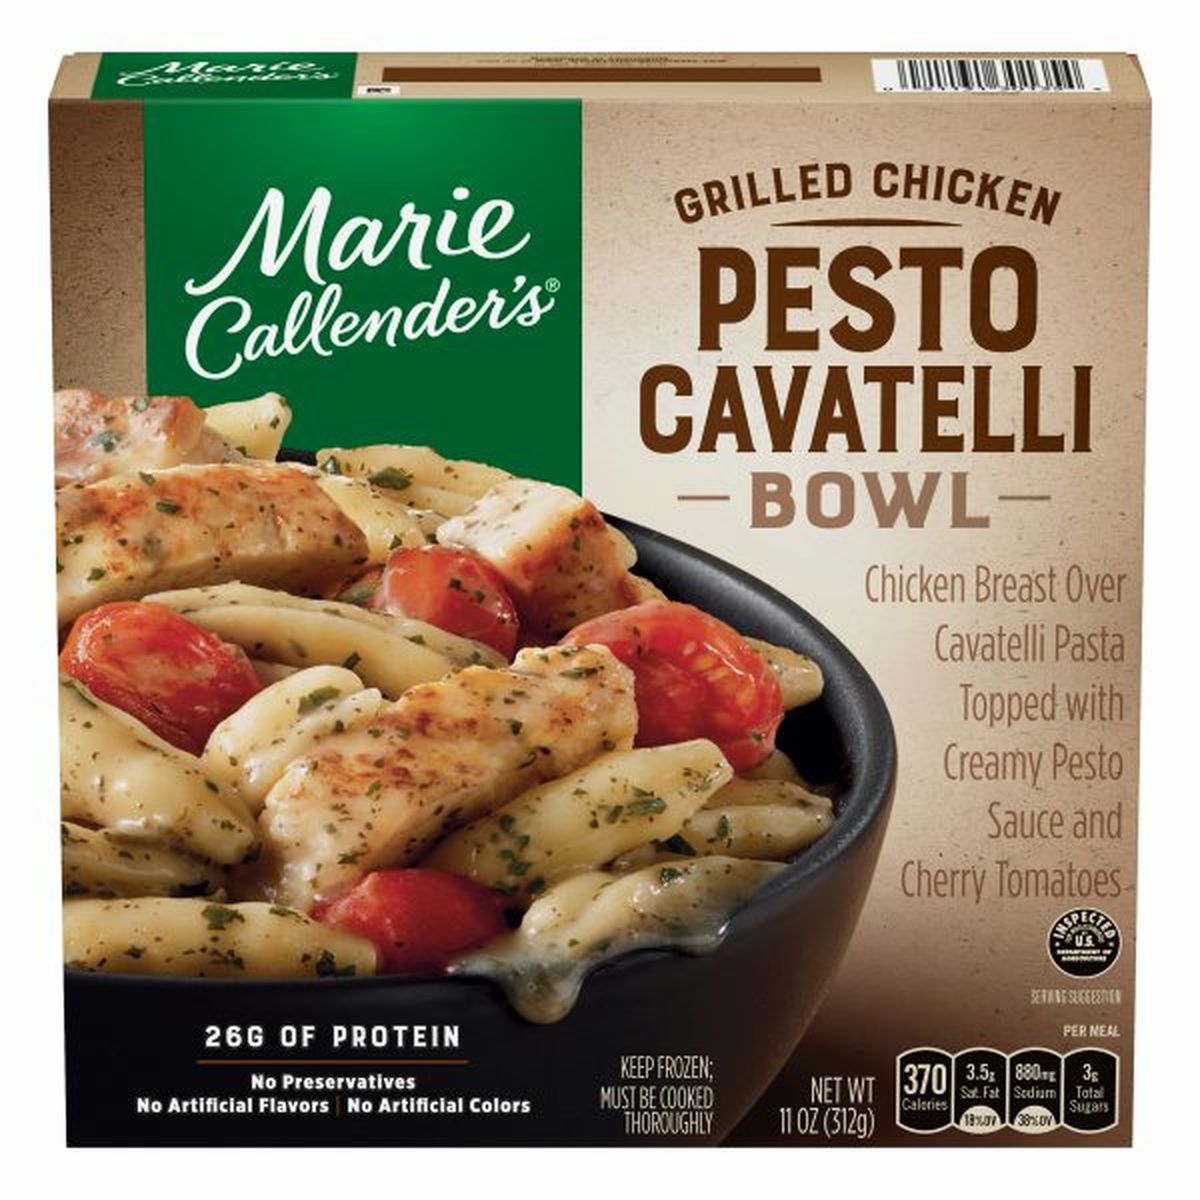 Calories in Marie Callender's Grilled Chicken Pesto Cavatelli Bowl